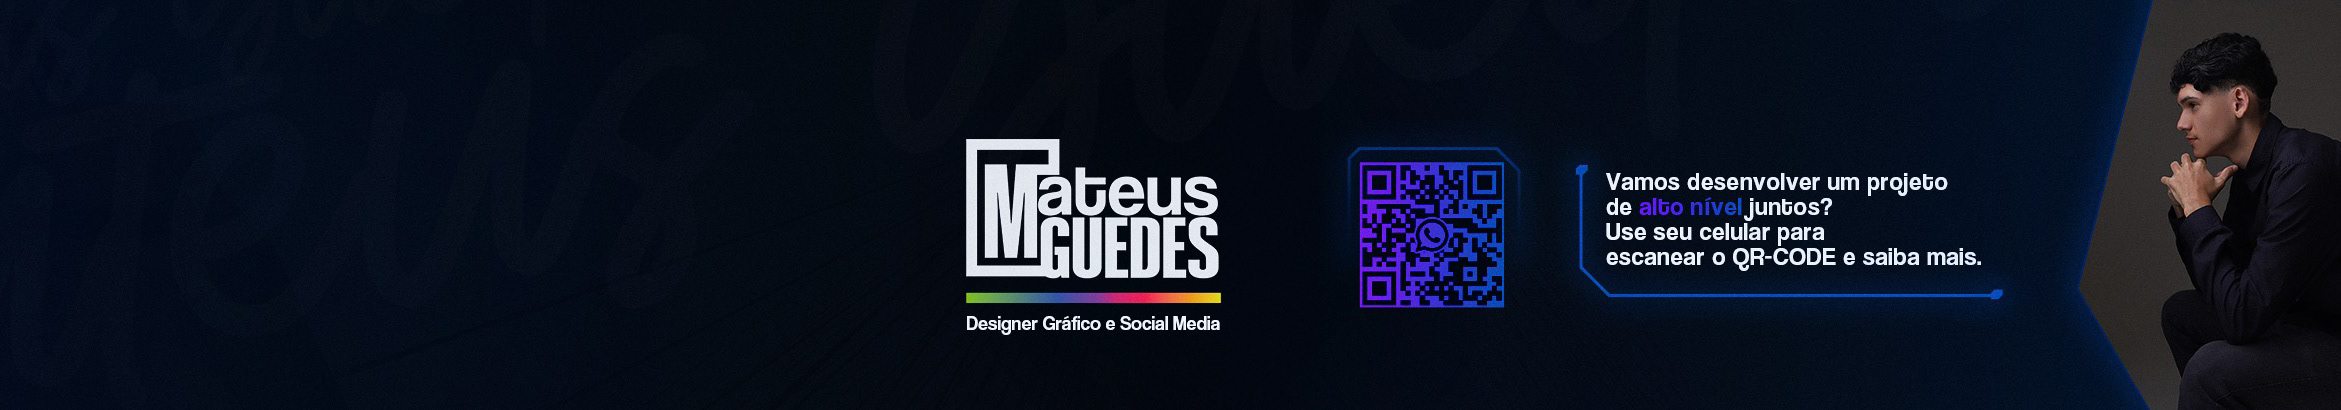 Mateus Guedes's profile banner